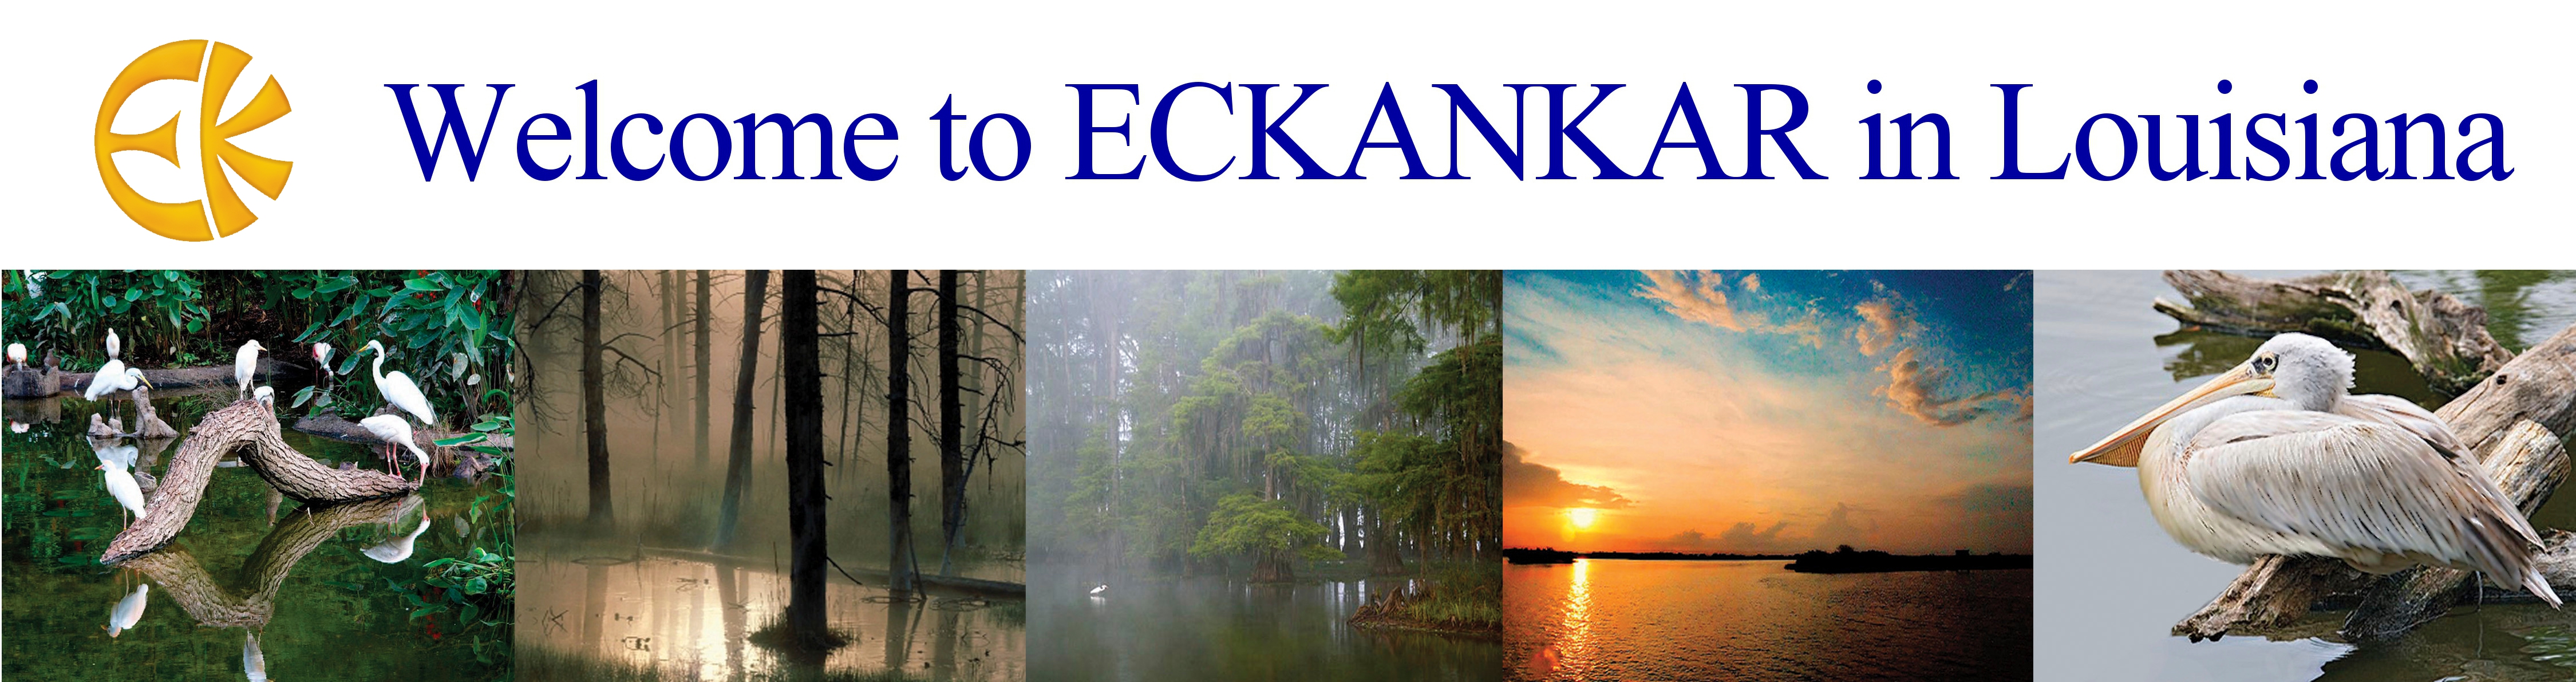 Eckankar in Louisiana